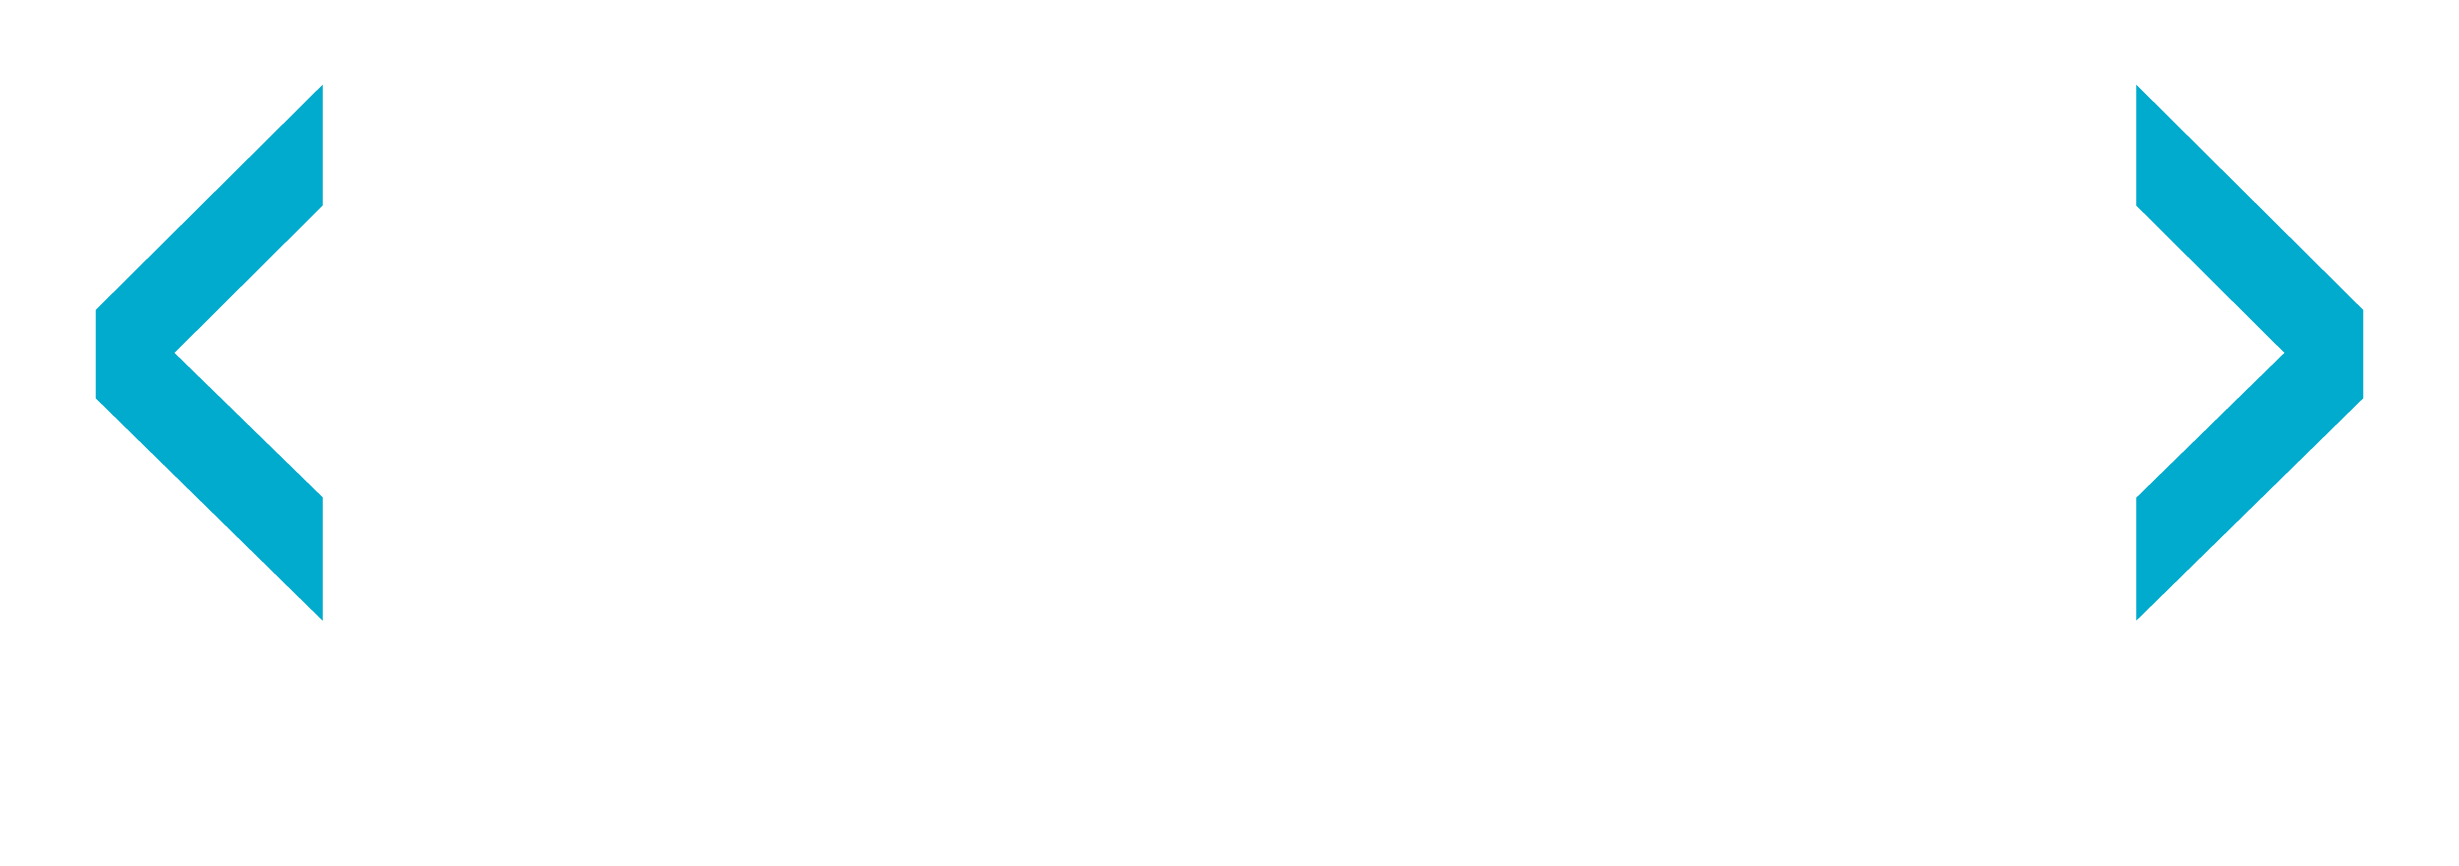 Epam logo